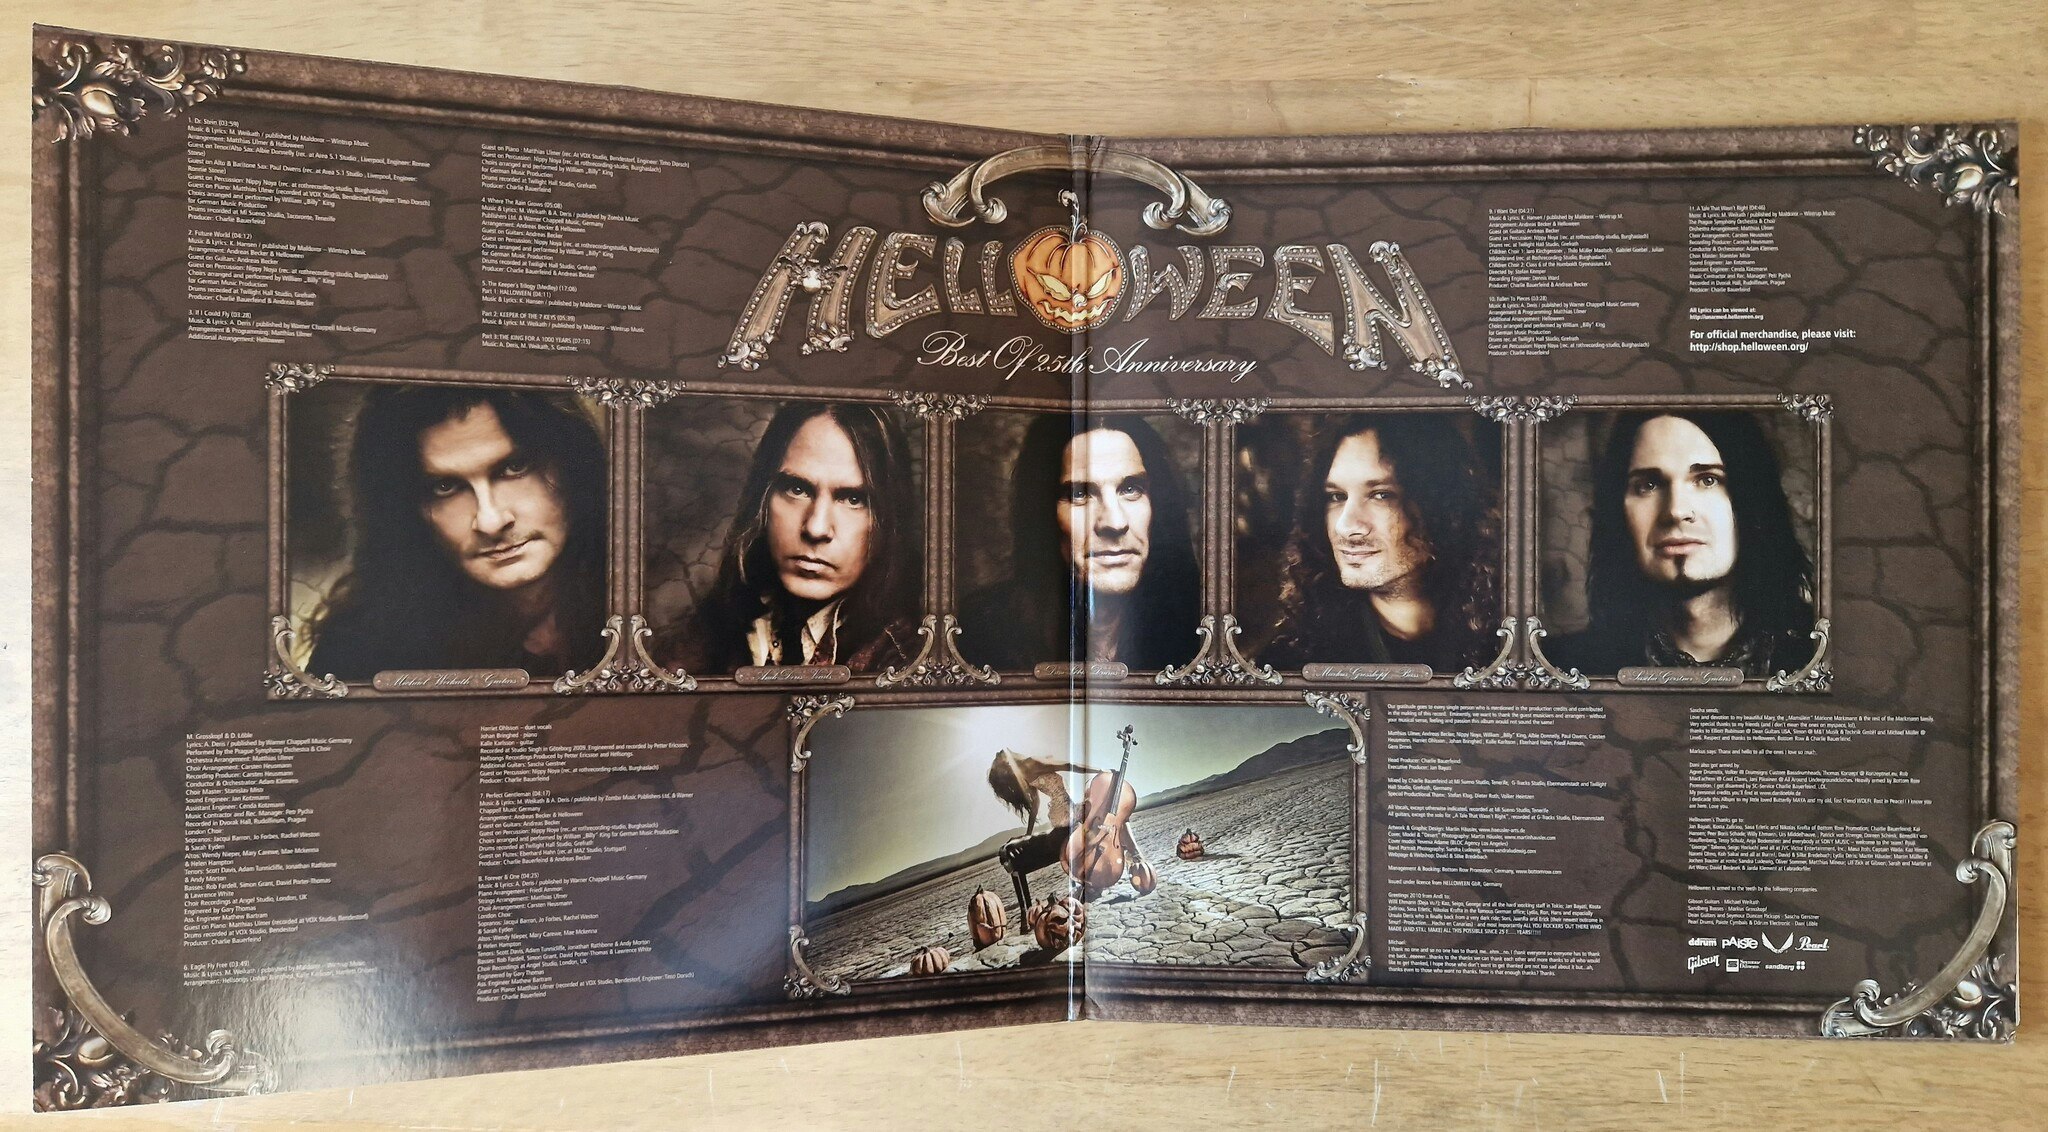 Helloween, Unarmed (Best of 25th anniversary). Vinyl 2LP